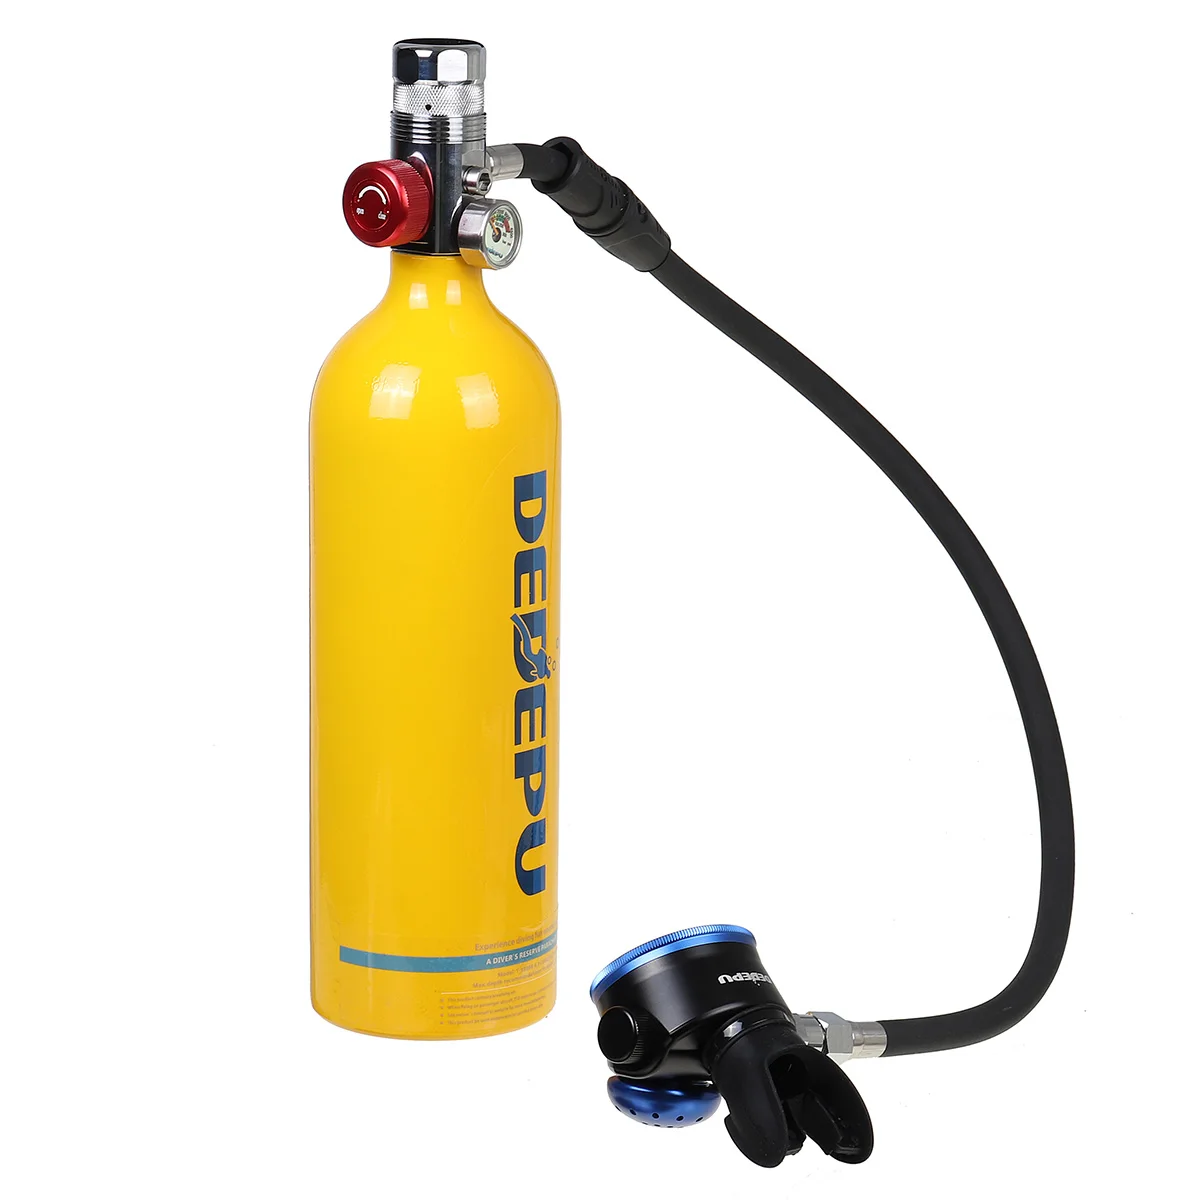 

DEDEPU 1L Scuba Diving Cylinder Mini Oxygen Tank Dive Respirator Air Tank Pump for Snorkeling Breath Diving Equipment Tool Set